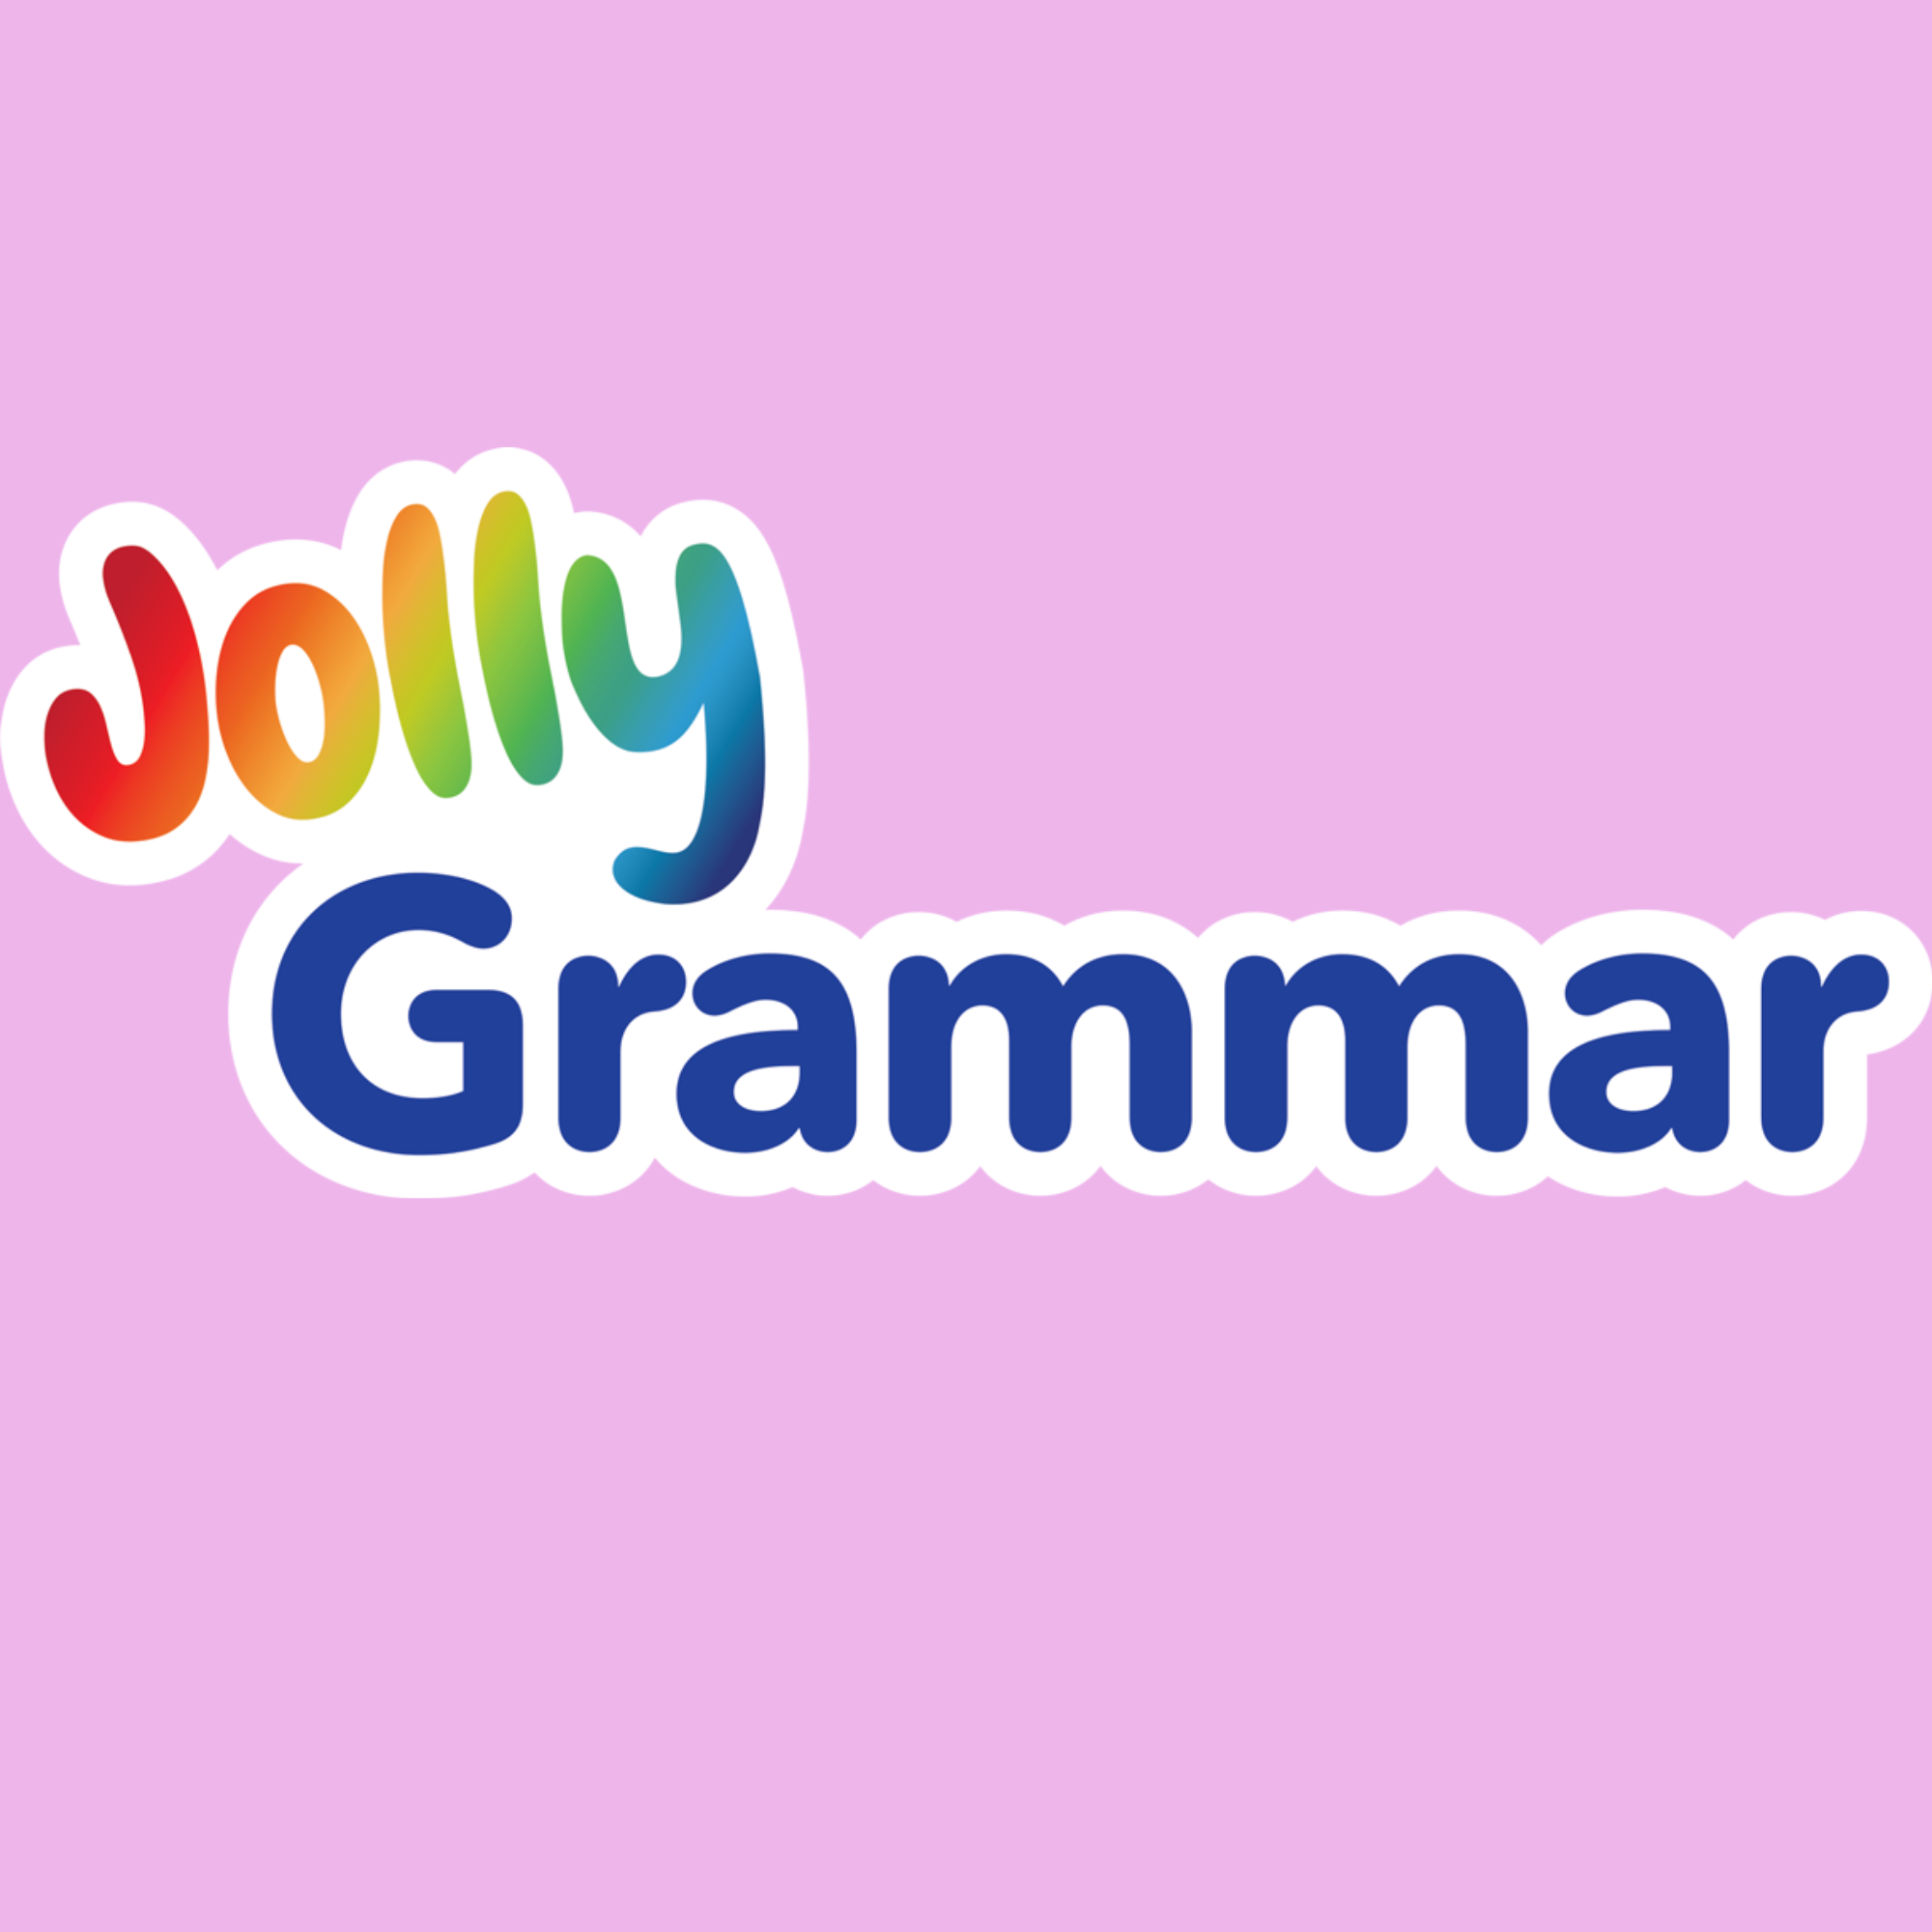 jolly-grammar-1-6-2nd-3rd-november-2022-jolly-education-and-training